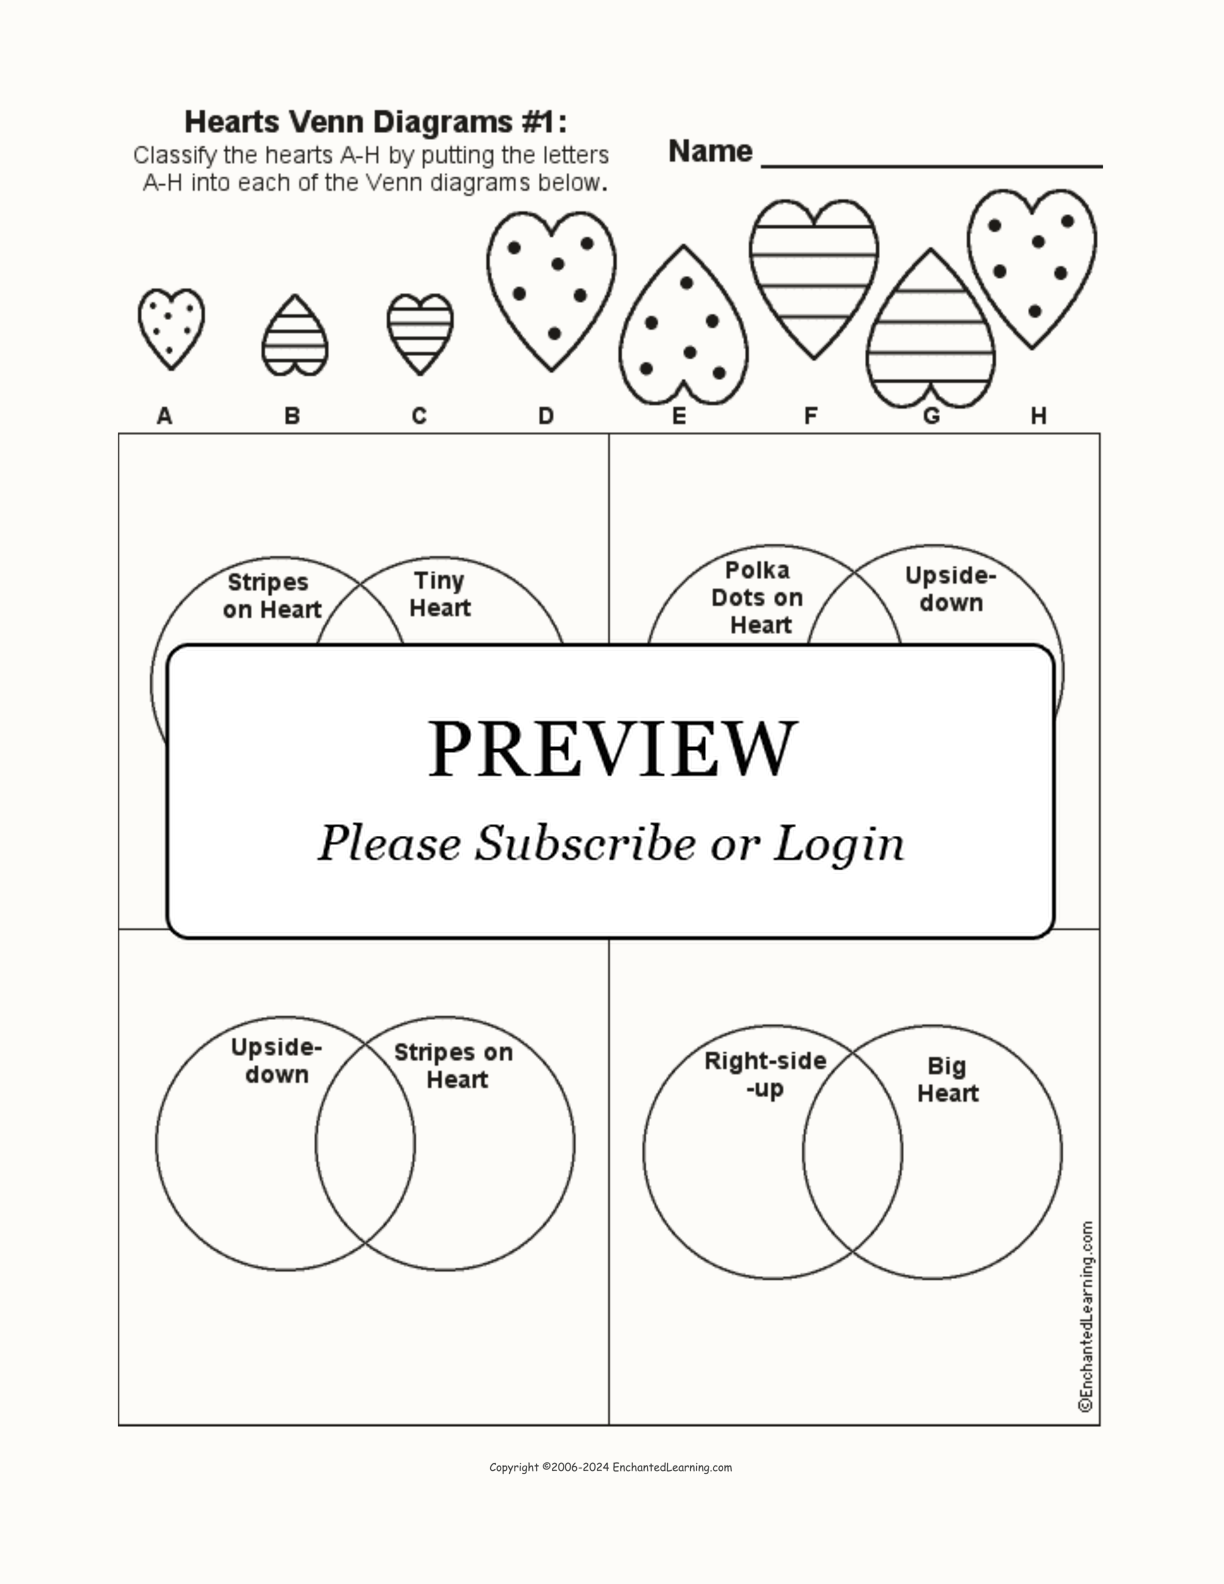 Hearts Venn Diagram #1 interactive worksheet page 1